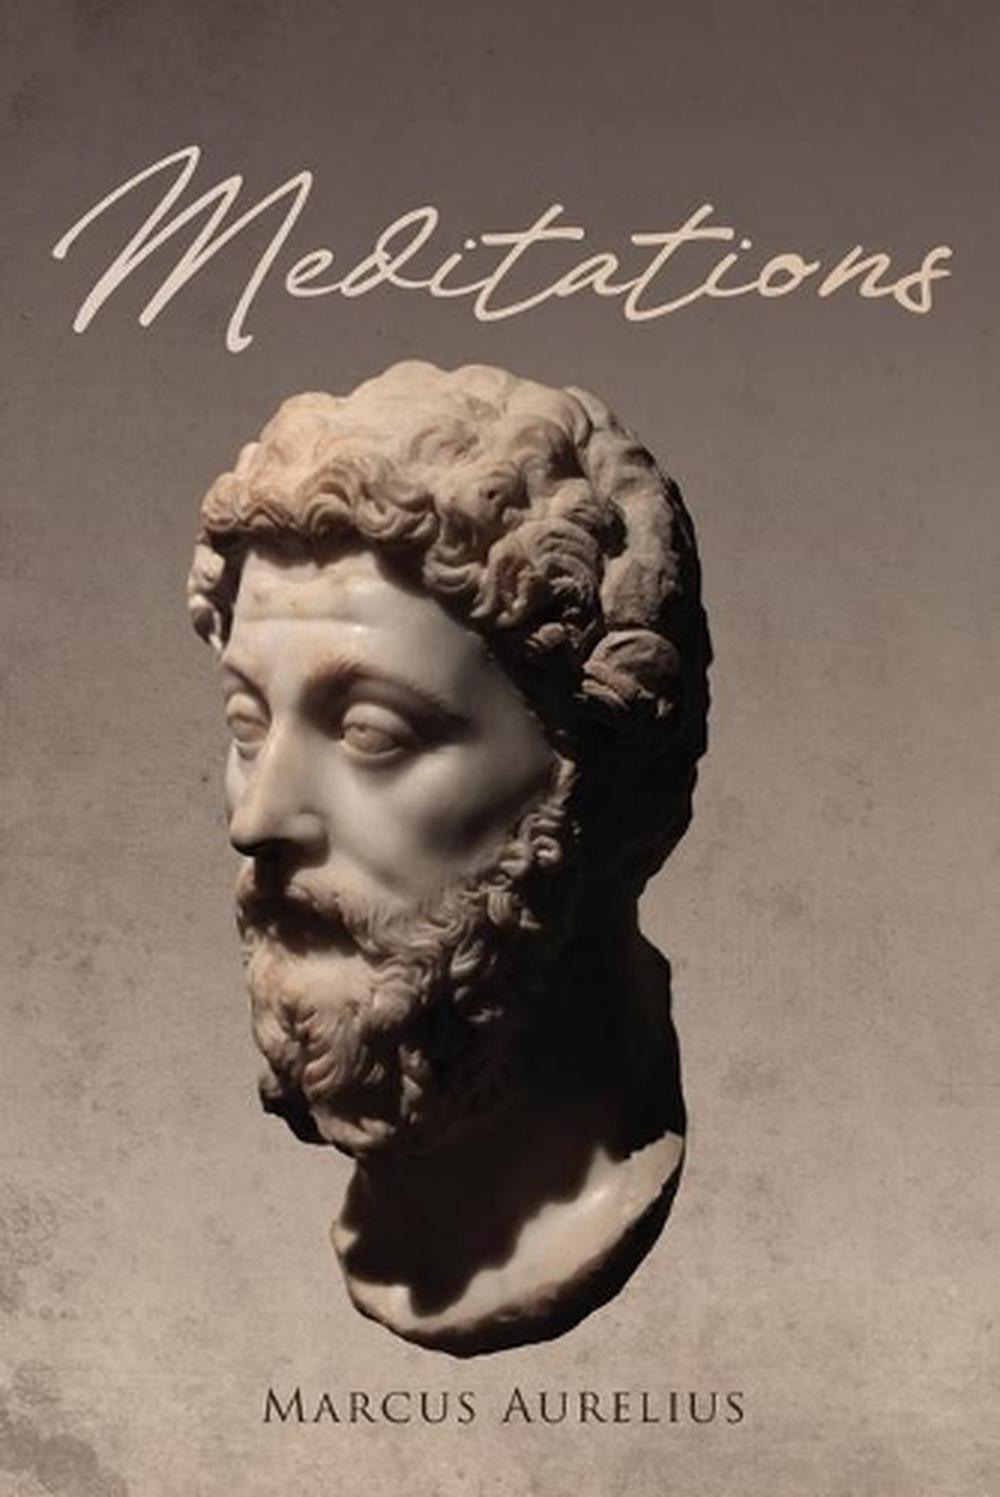 Meditaciones by Marcus Aurelius